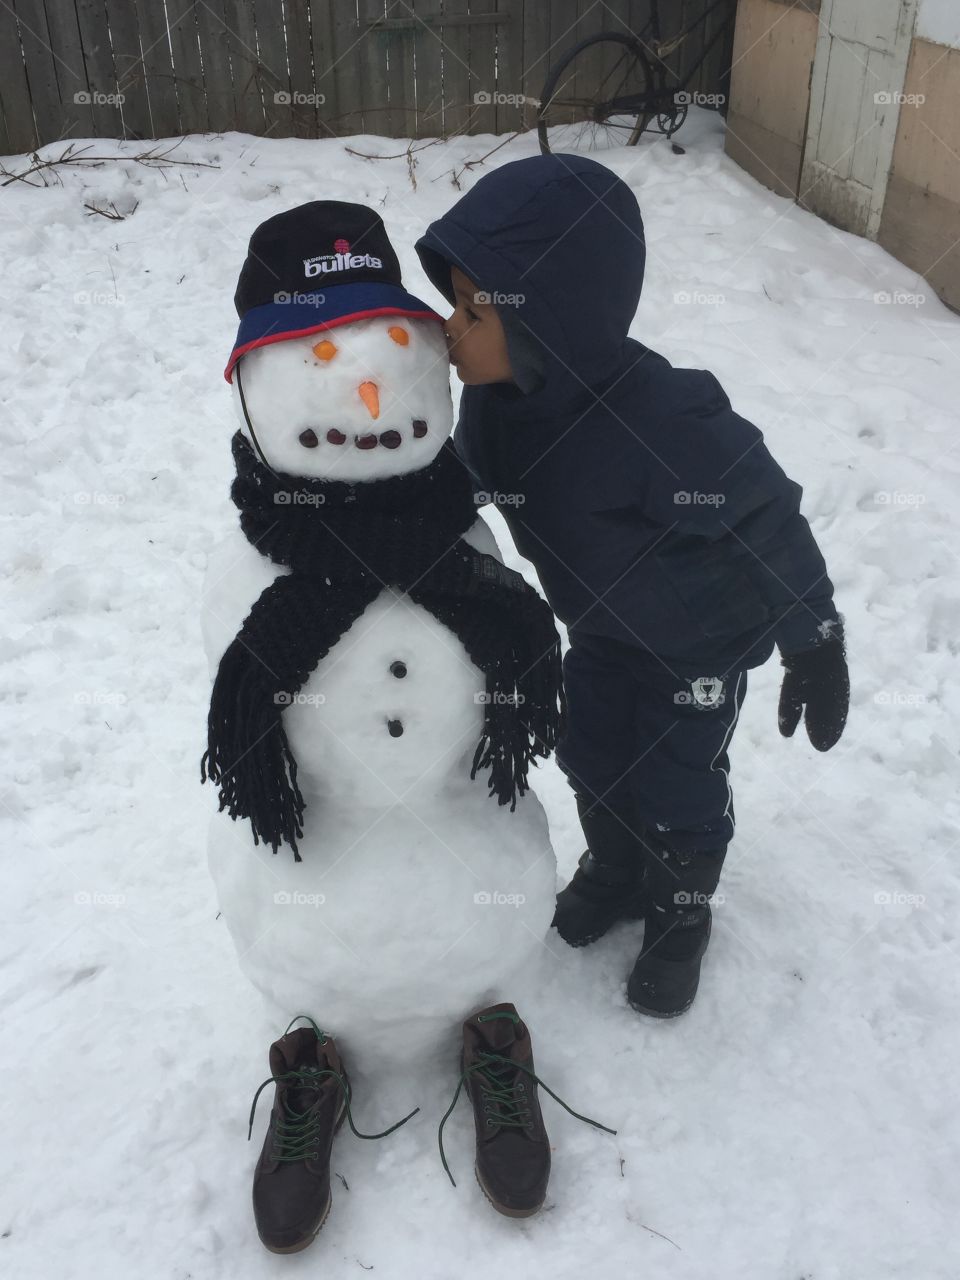 Kissing the snowman 